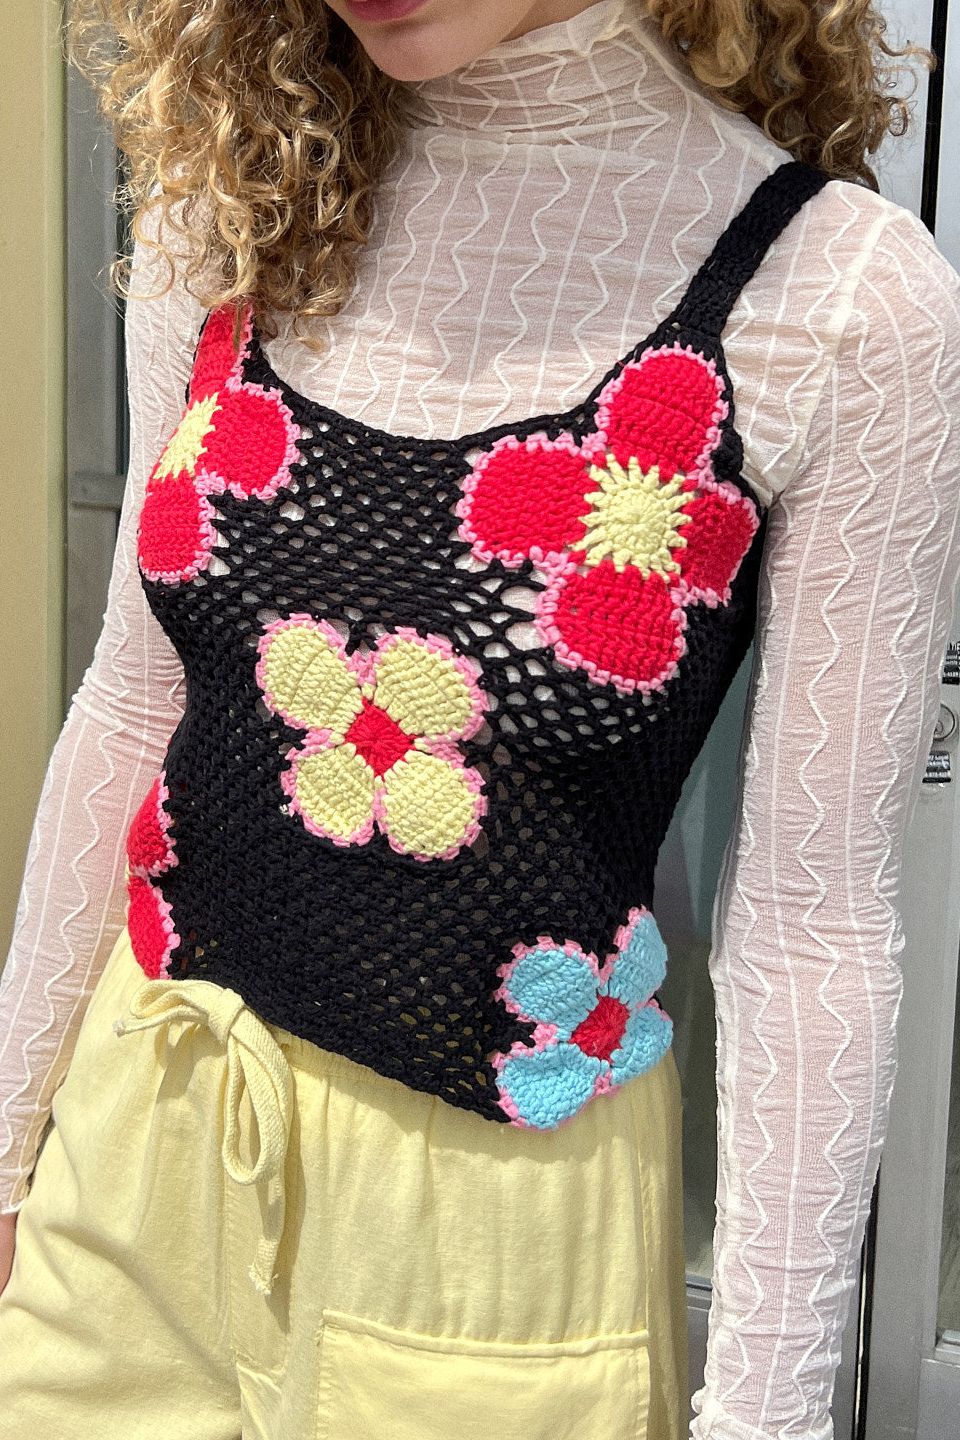 Long Sleeve Crochet Blouse And Bra - Crochet Ideas  Crochet fashion,  Crochet tops free patterns, Crochet clothes